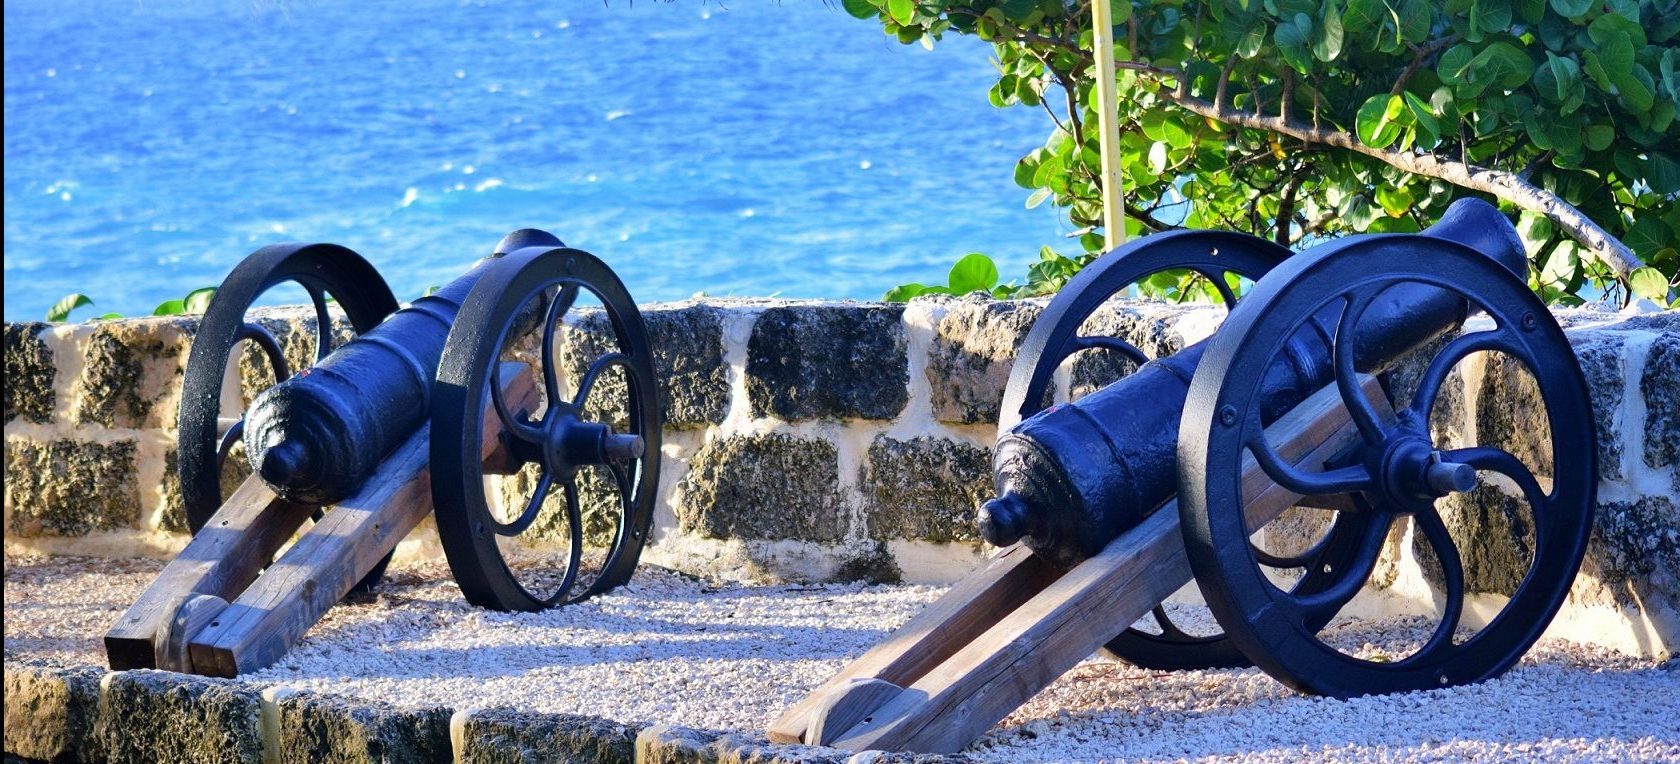 Gamla blåa piratkanoner i Barbados Karibien